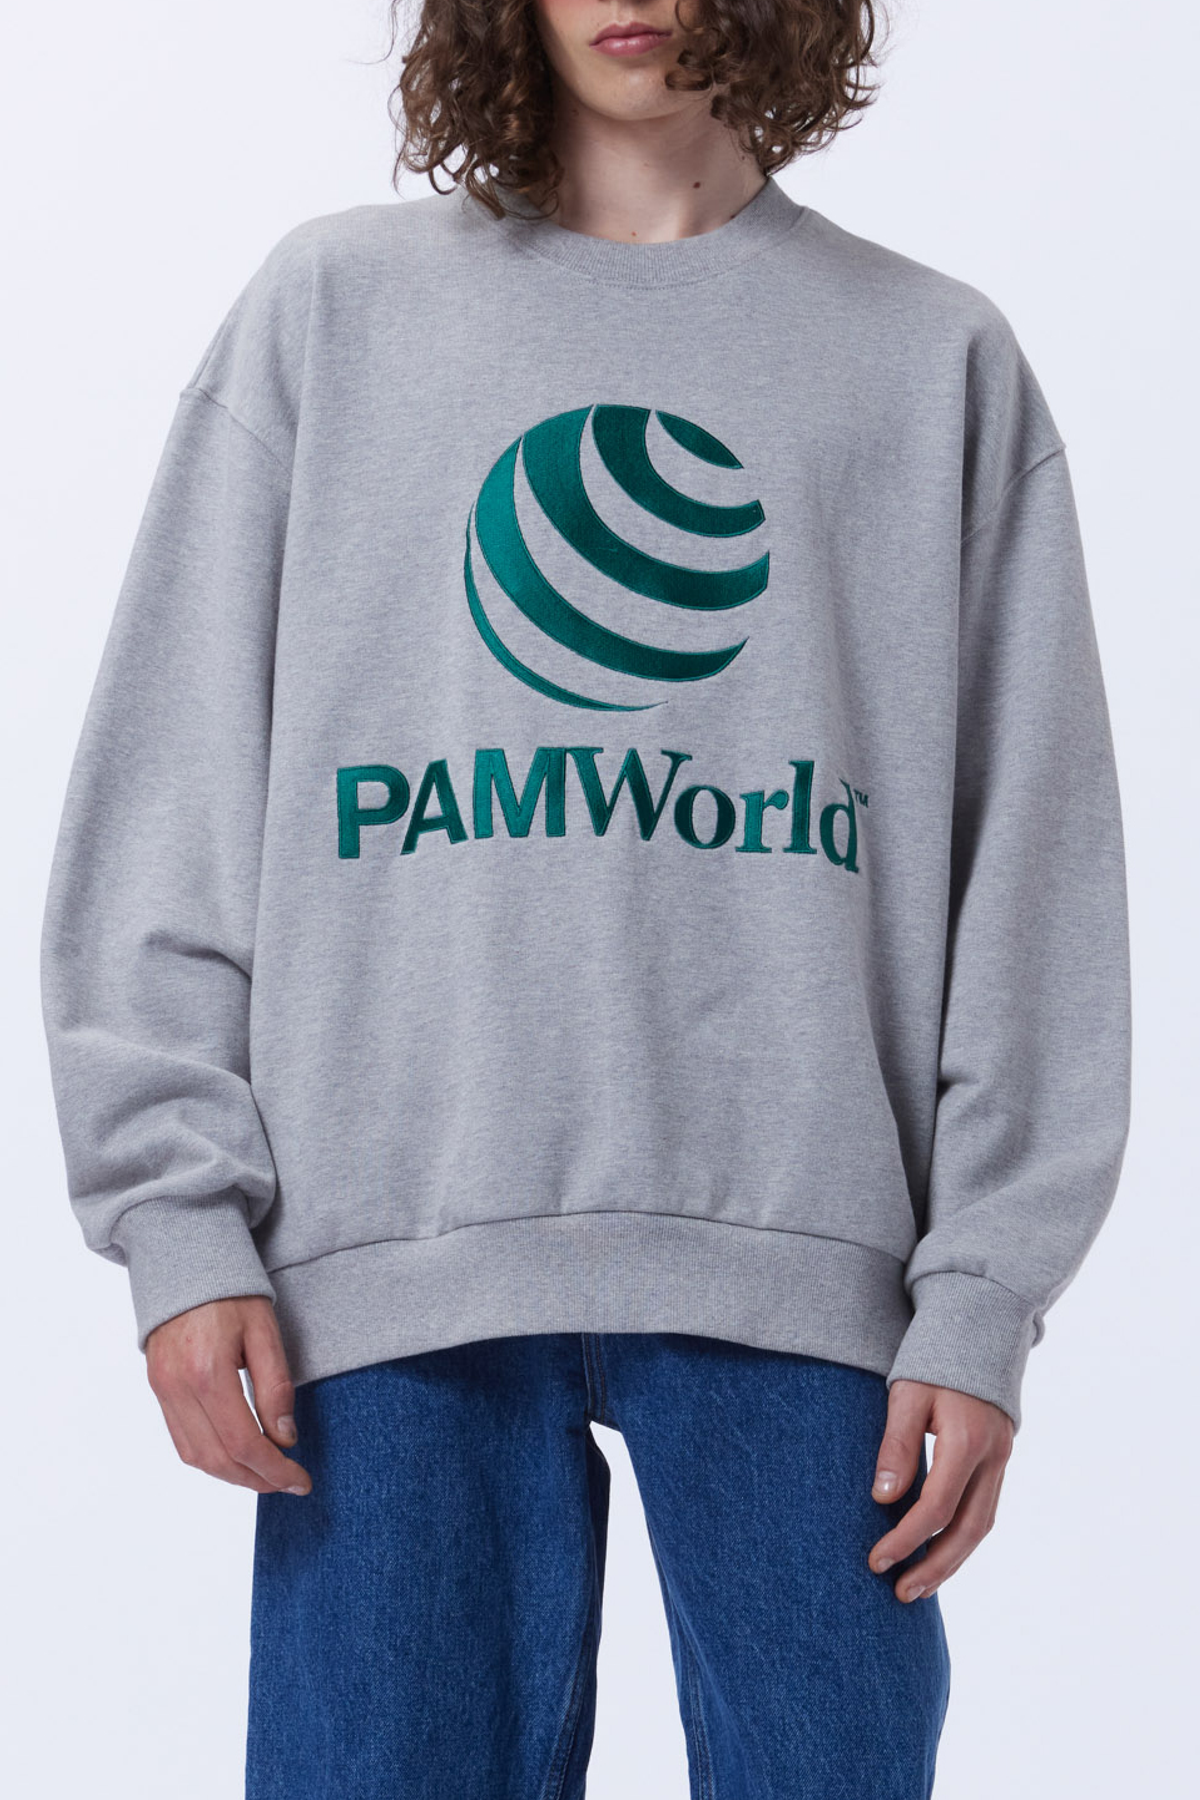 P.A.M. World Crewneck - Grey